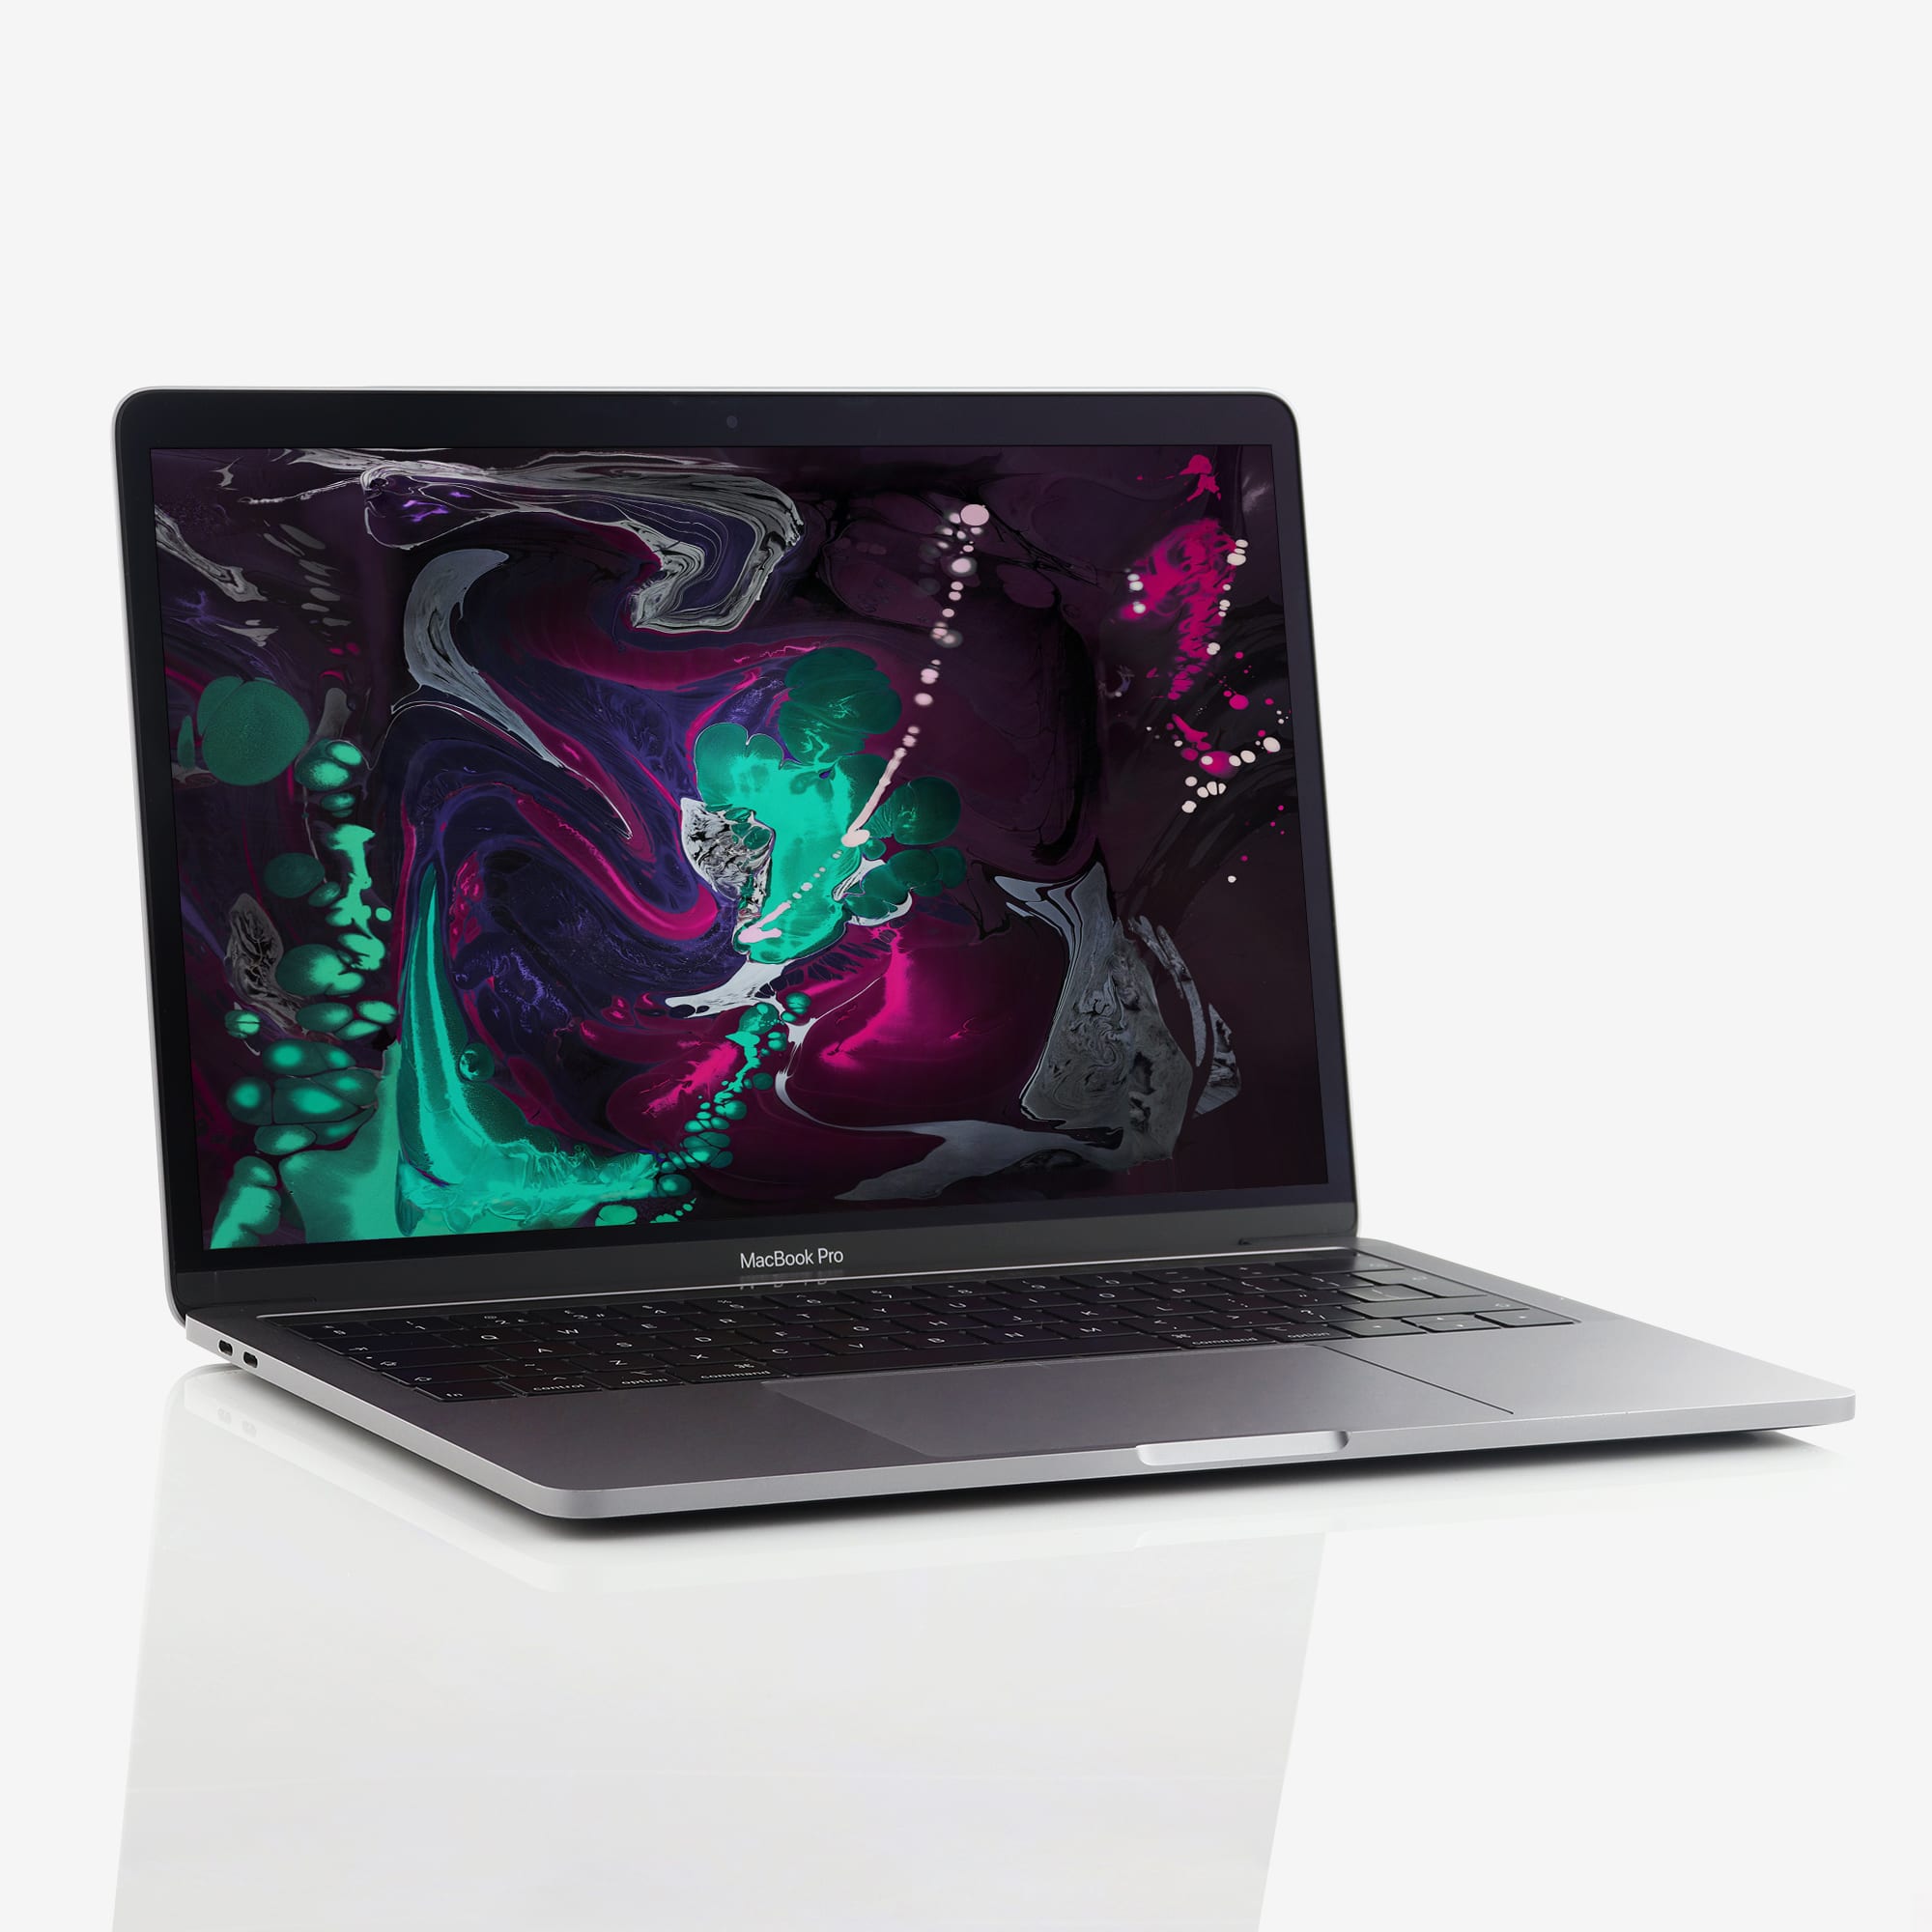 1 x Apple MacBook Pro Retina 13 Inch Touchbar Intel Core i7 2.70 GHz (2018)